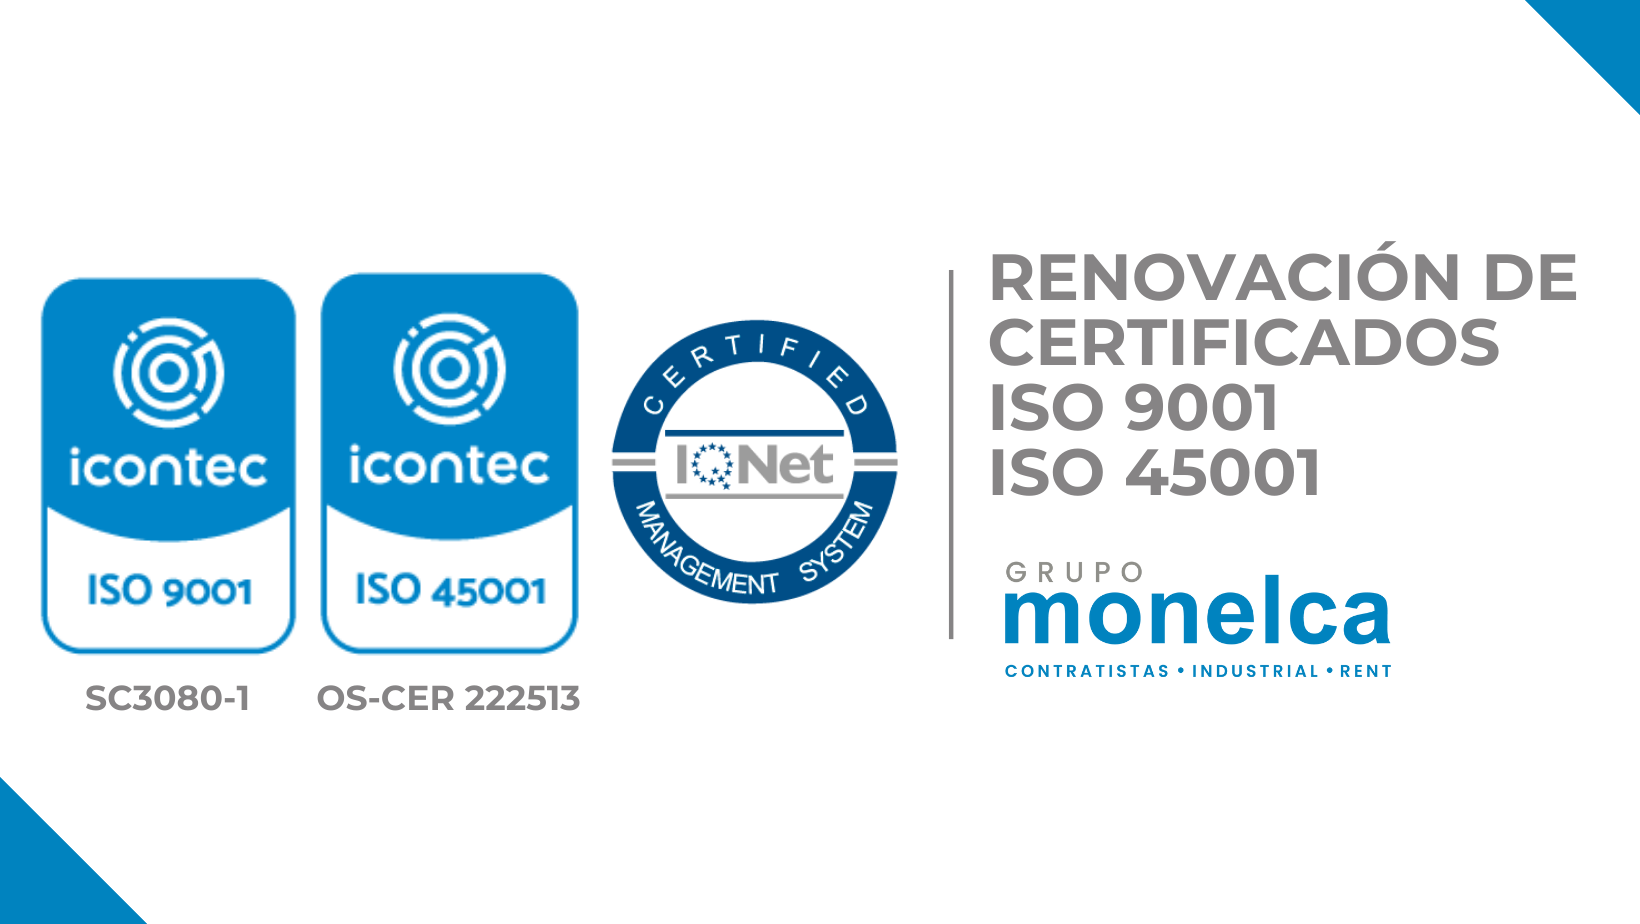 Grupo Monelca renueva las certificaciones ISO 9001 e ISO 45001